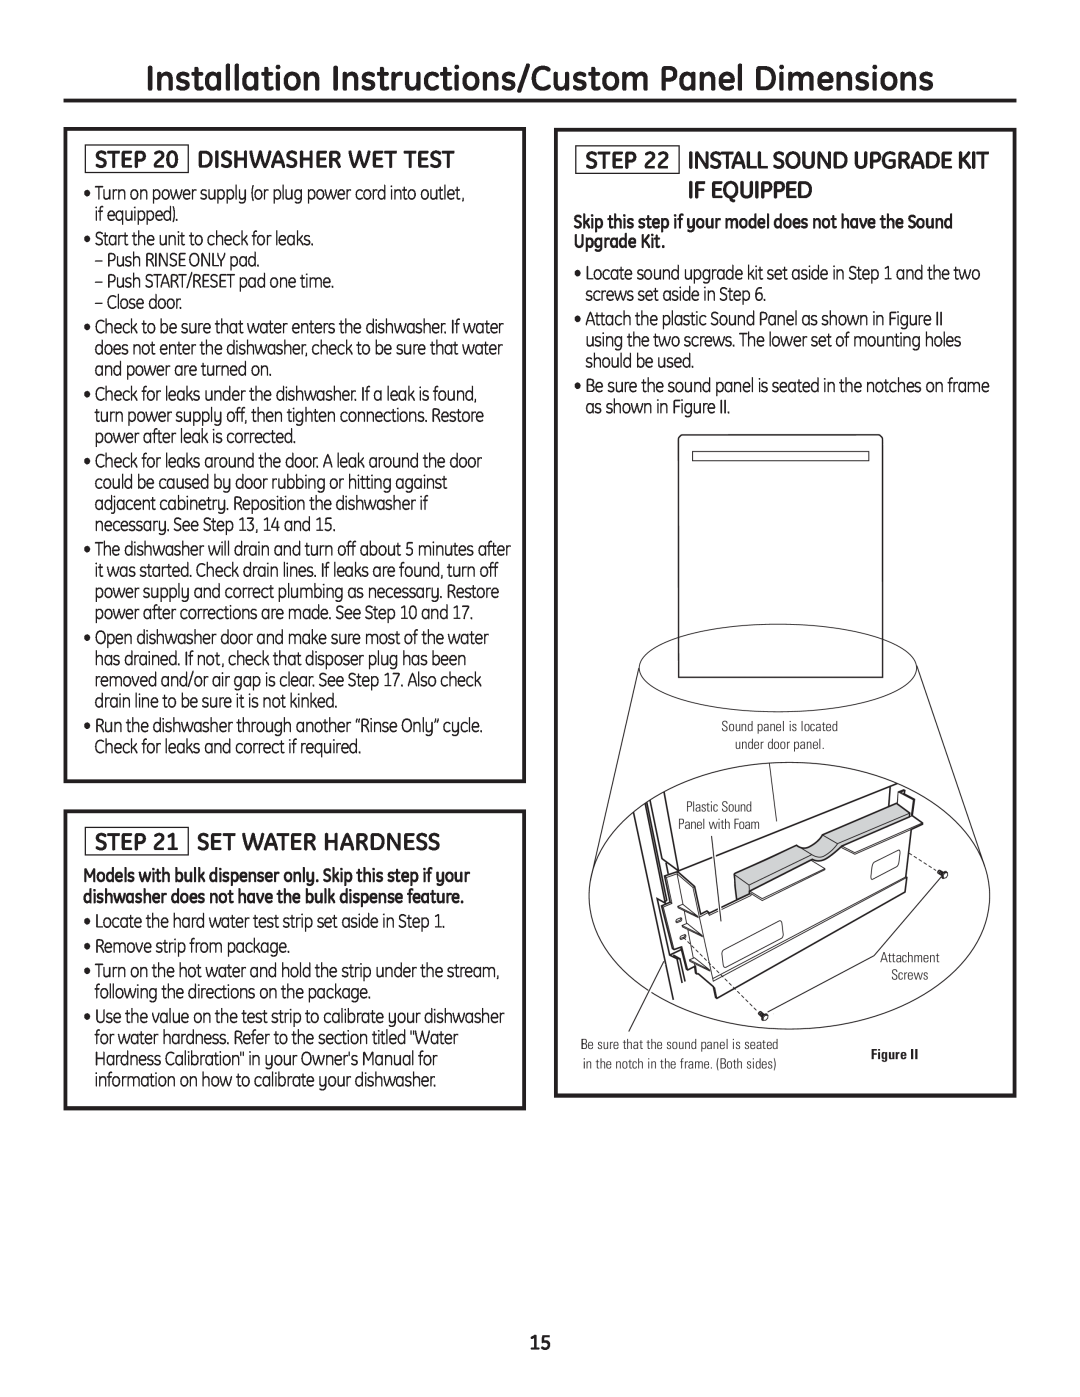 GE Monogram Built-In Dishwashers Installation Instructions/Custom Panel Dimensions, Dishwasher Wet Test 